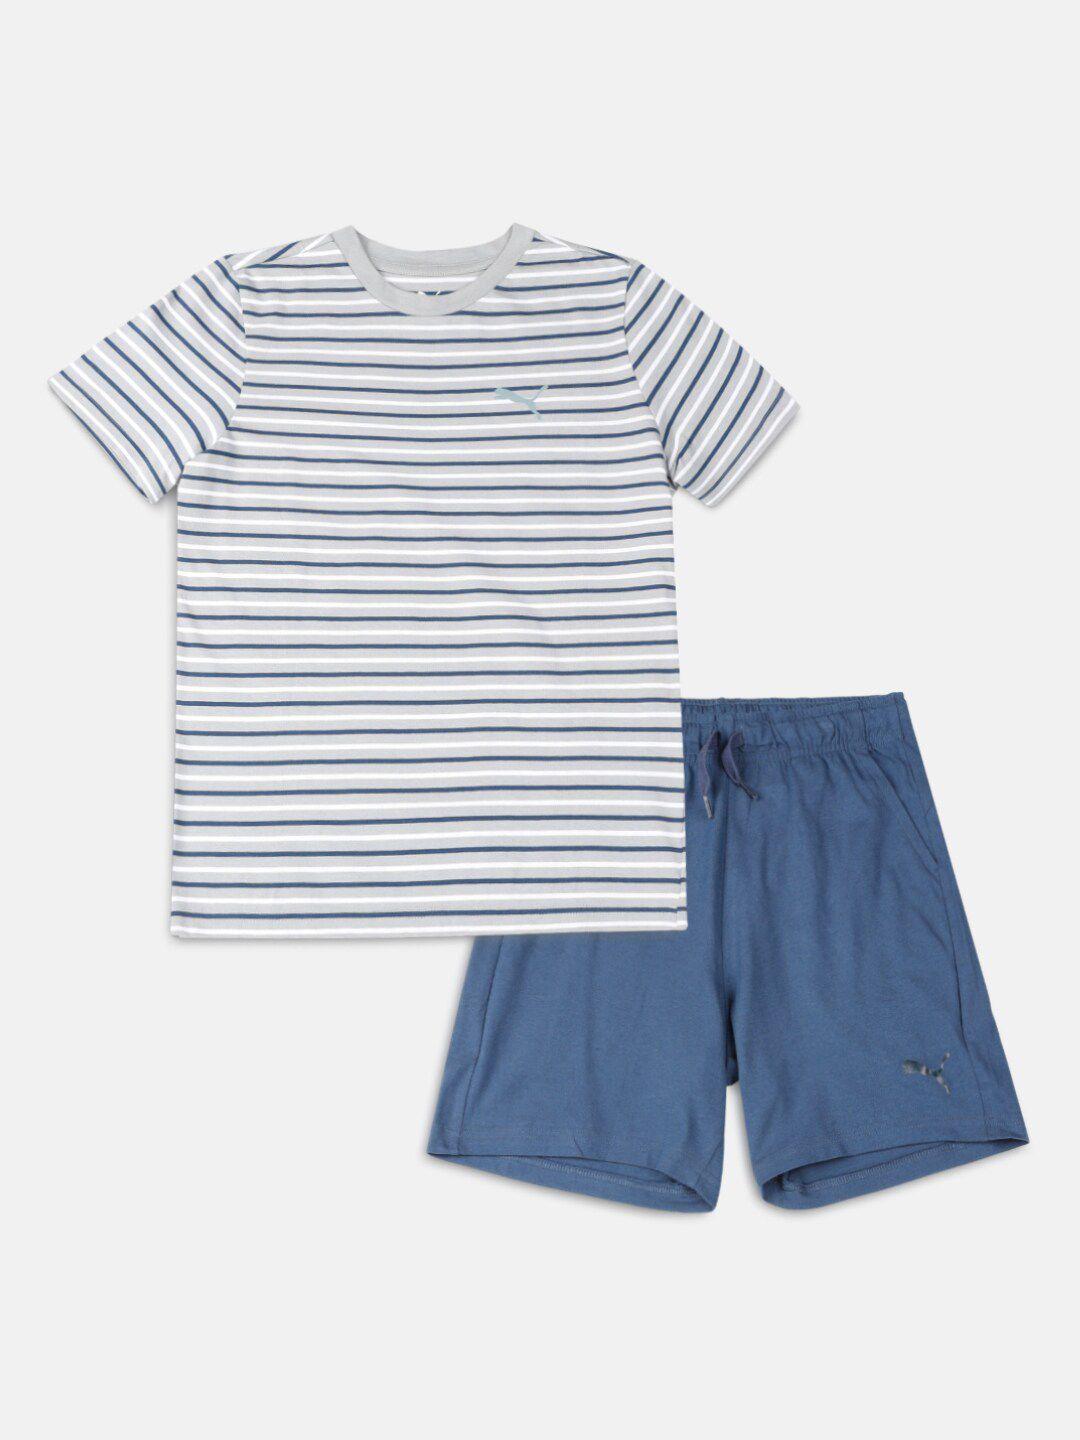 puma-boys-grey-&-navy-blue-striped-t-shirt-with-shorts